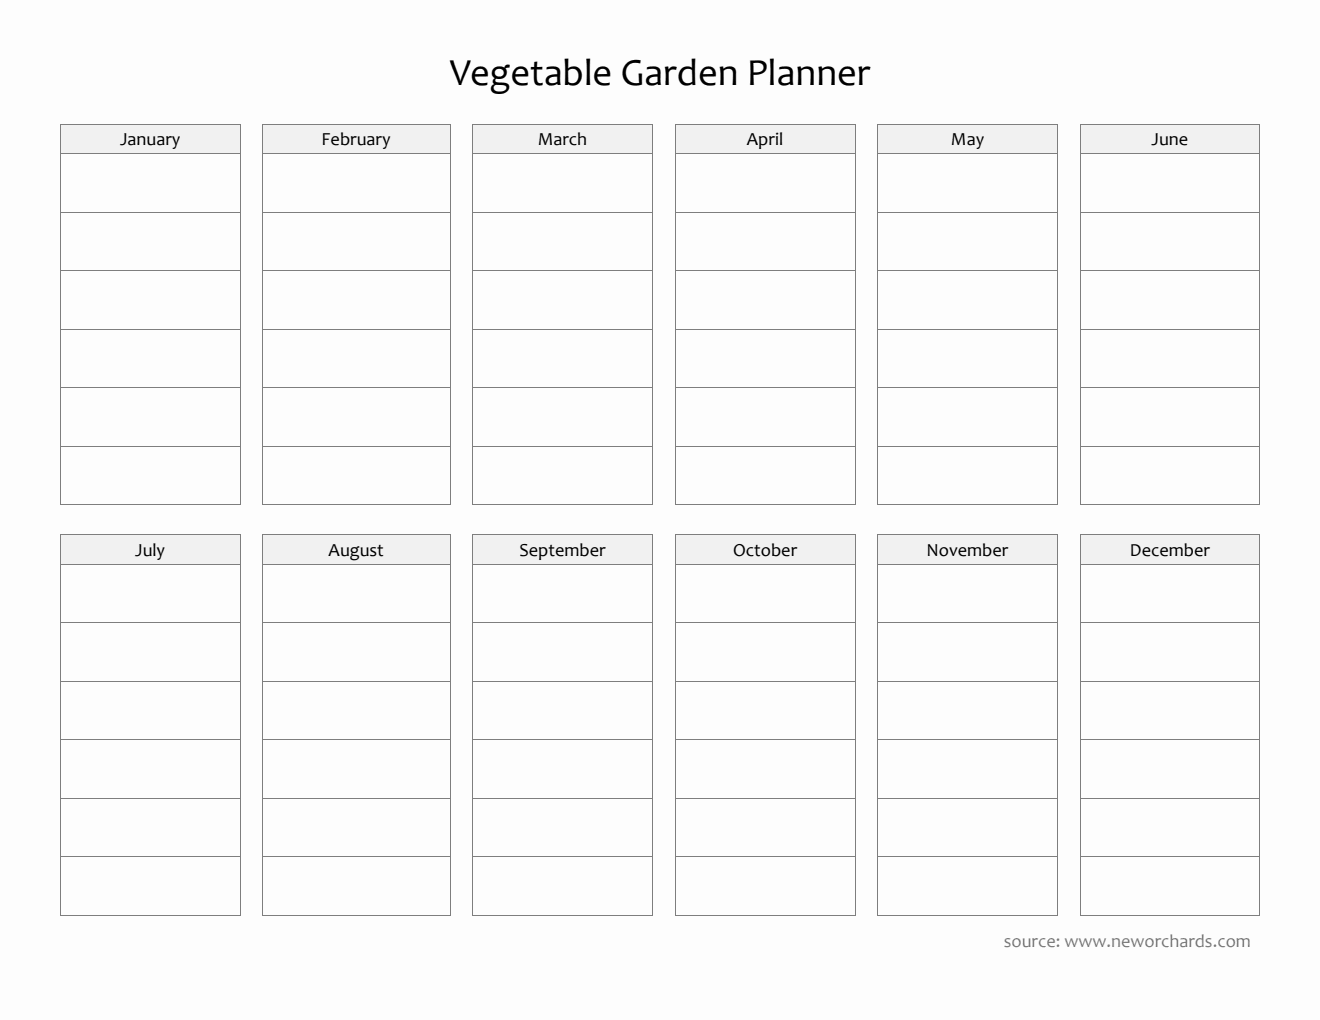 Blank Vegetable Garden Planner in Word